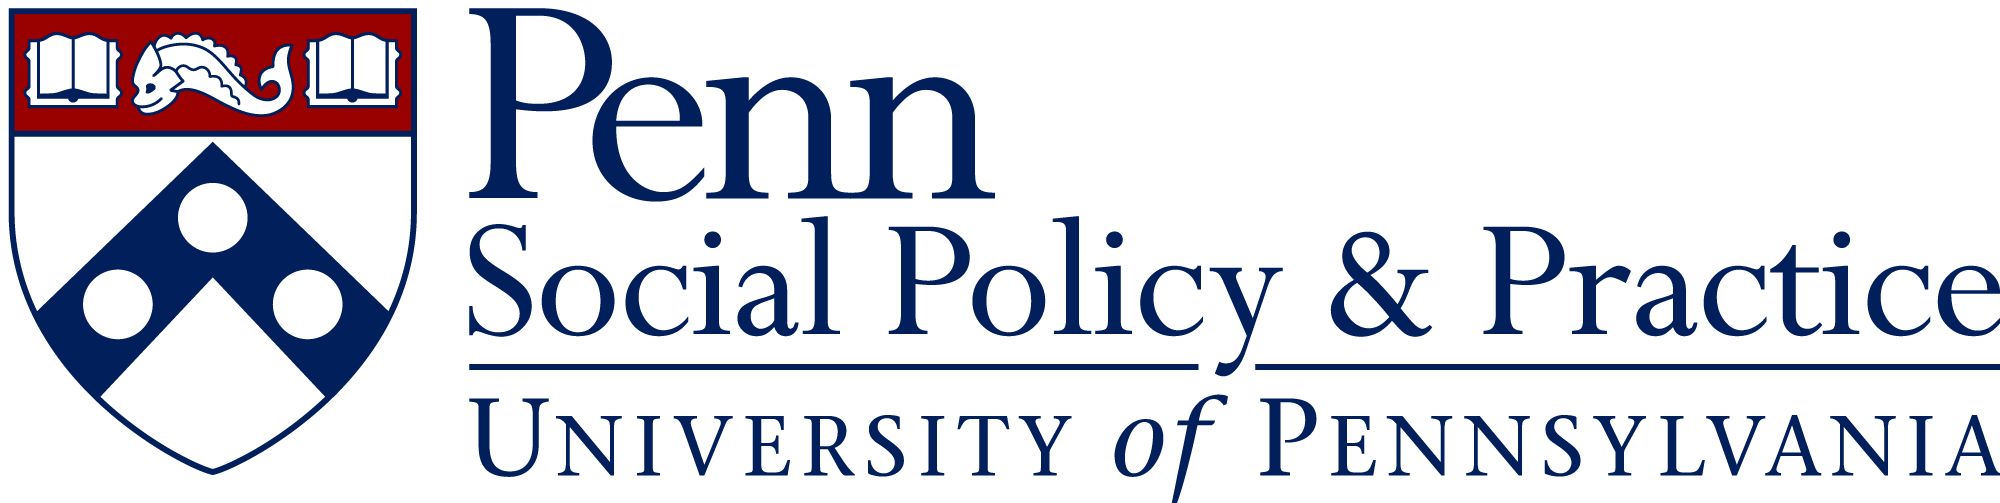 Penn School of Social Policy & Practice